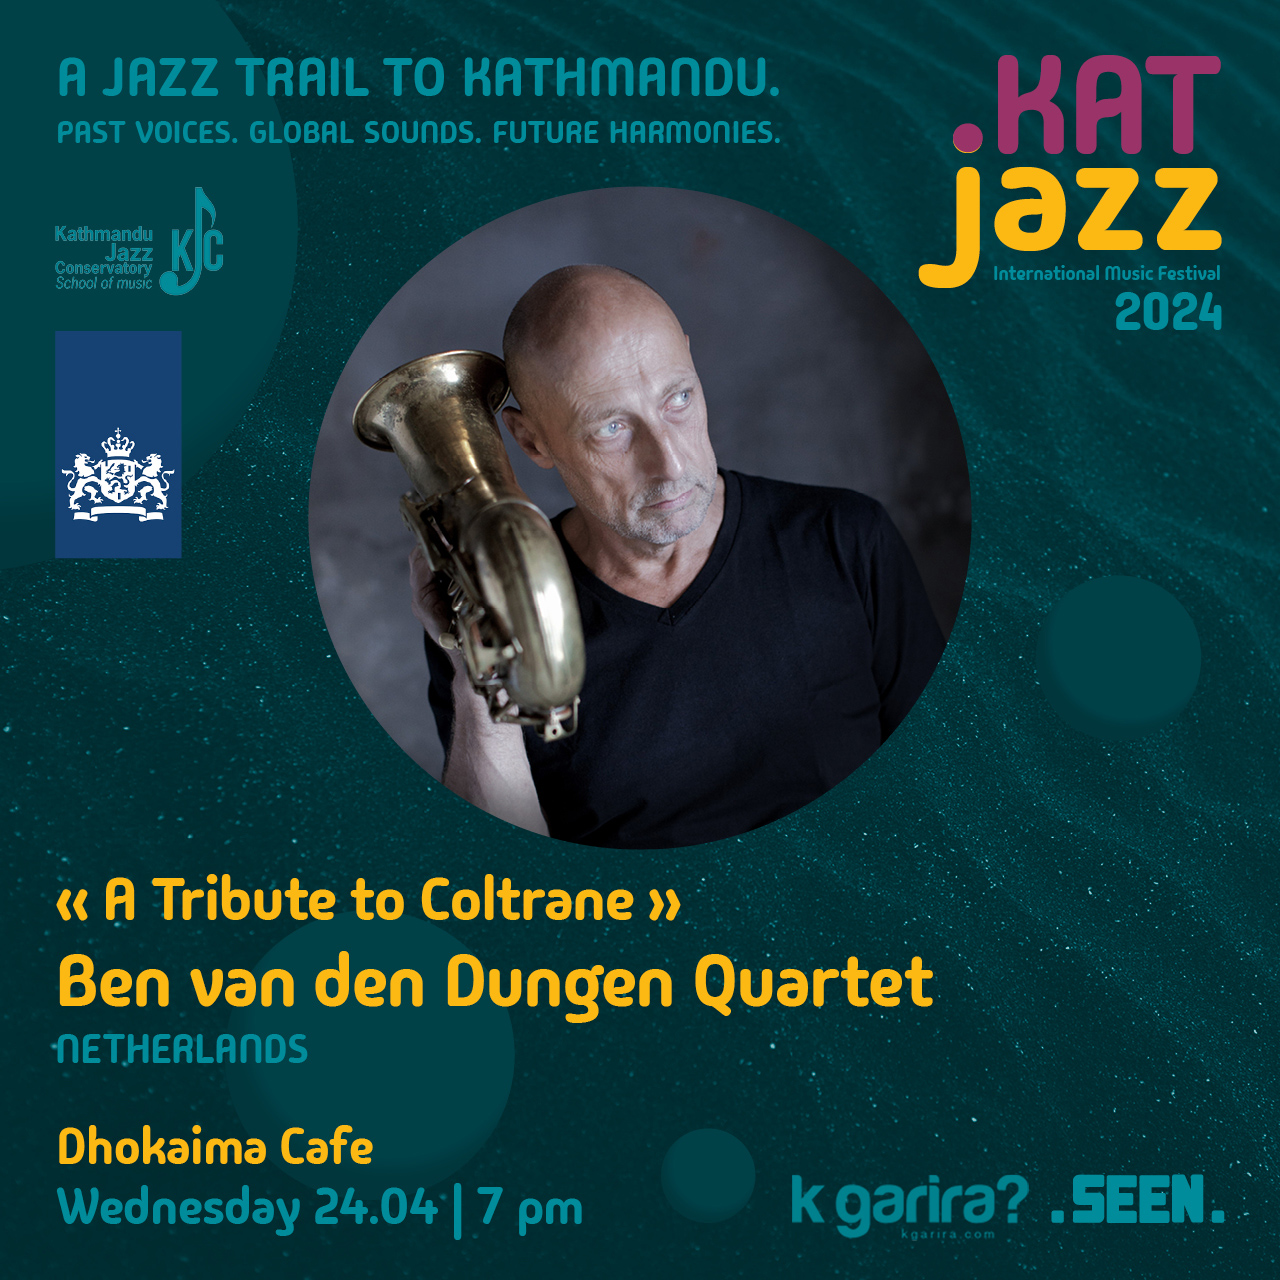 Kat Jazz - A Tribute to Coltrane by Ben van den Dungen Quartet